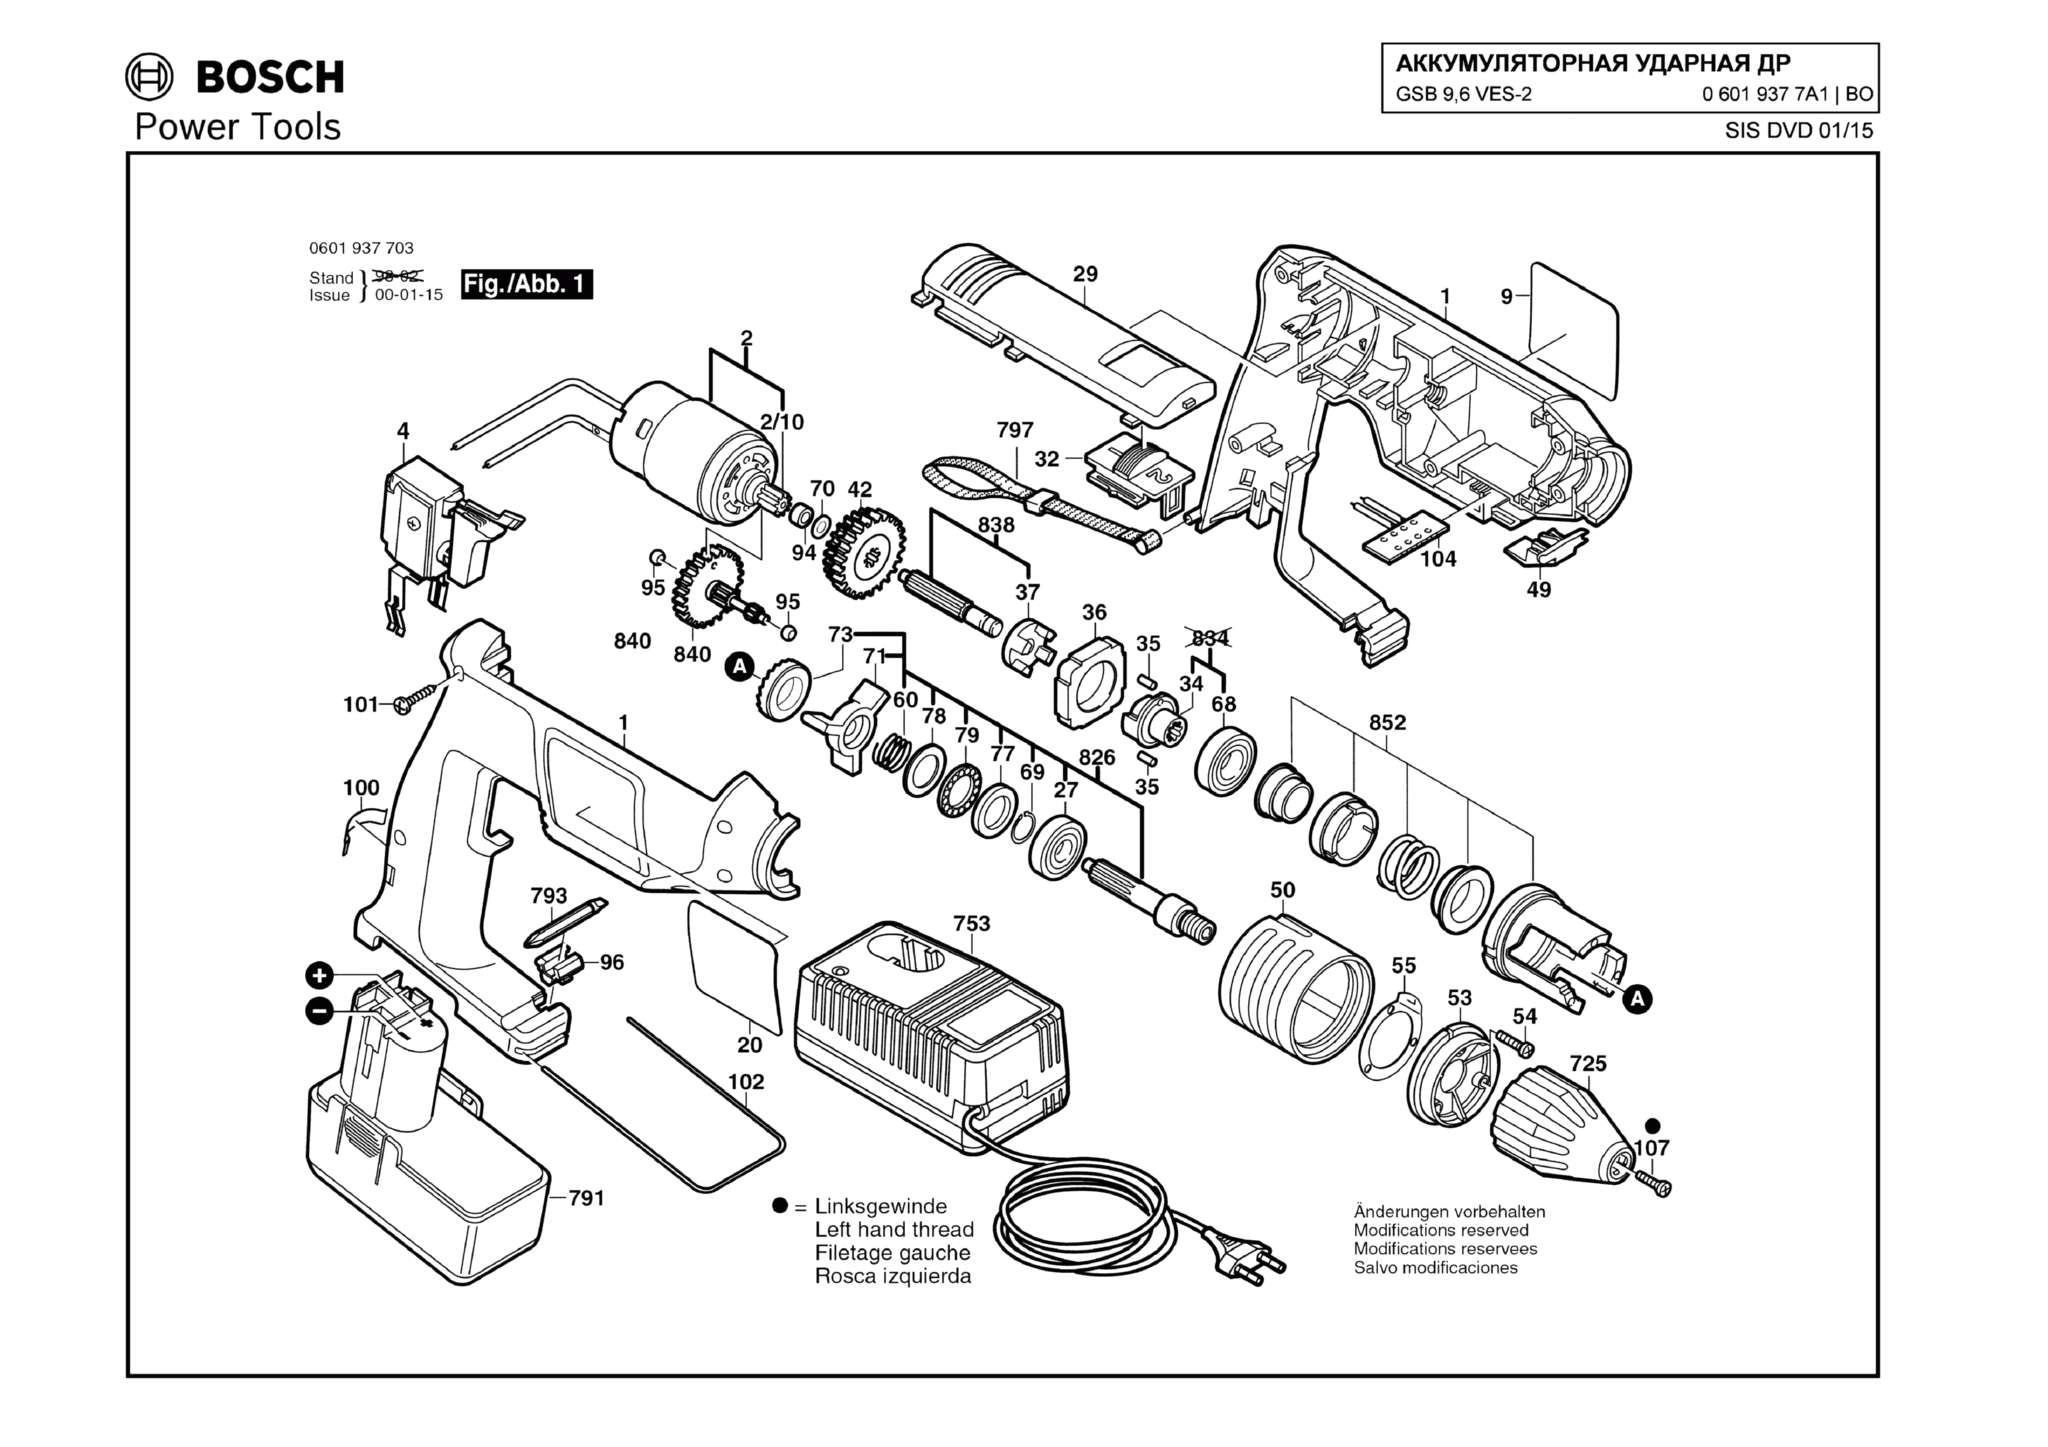 Запчасти, схема и деталировка Bosch GSB 9,6 VES-2 (ТИП 06019377A1)